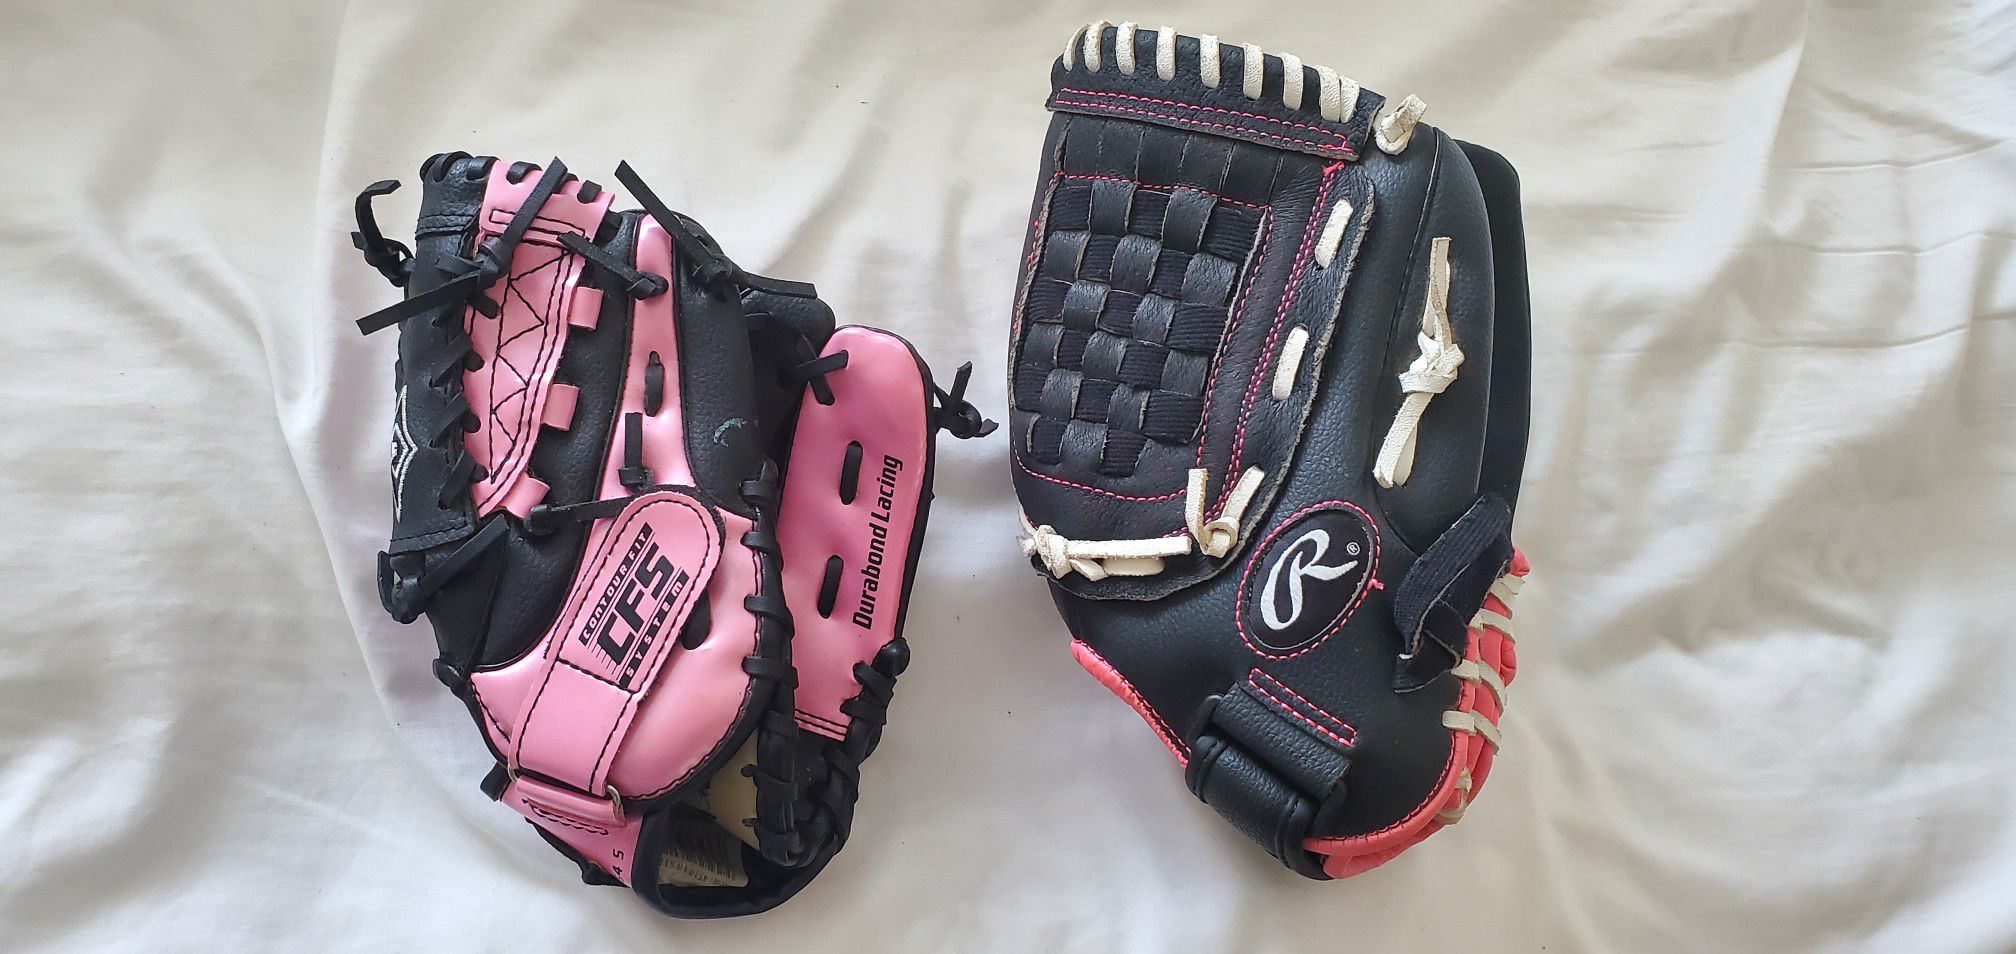 Rawlings & Franklin Girls Baseball and Fast Pitch Softball Gloves